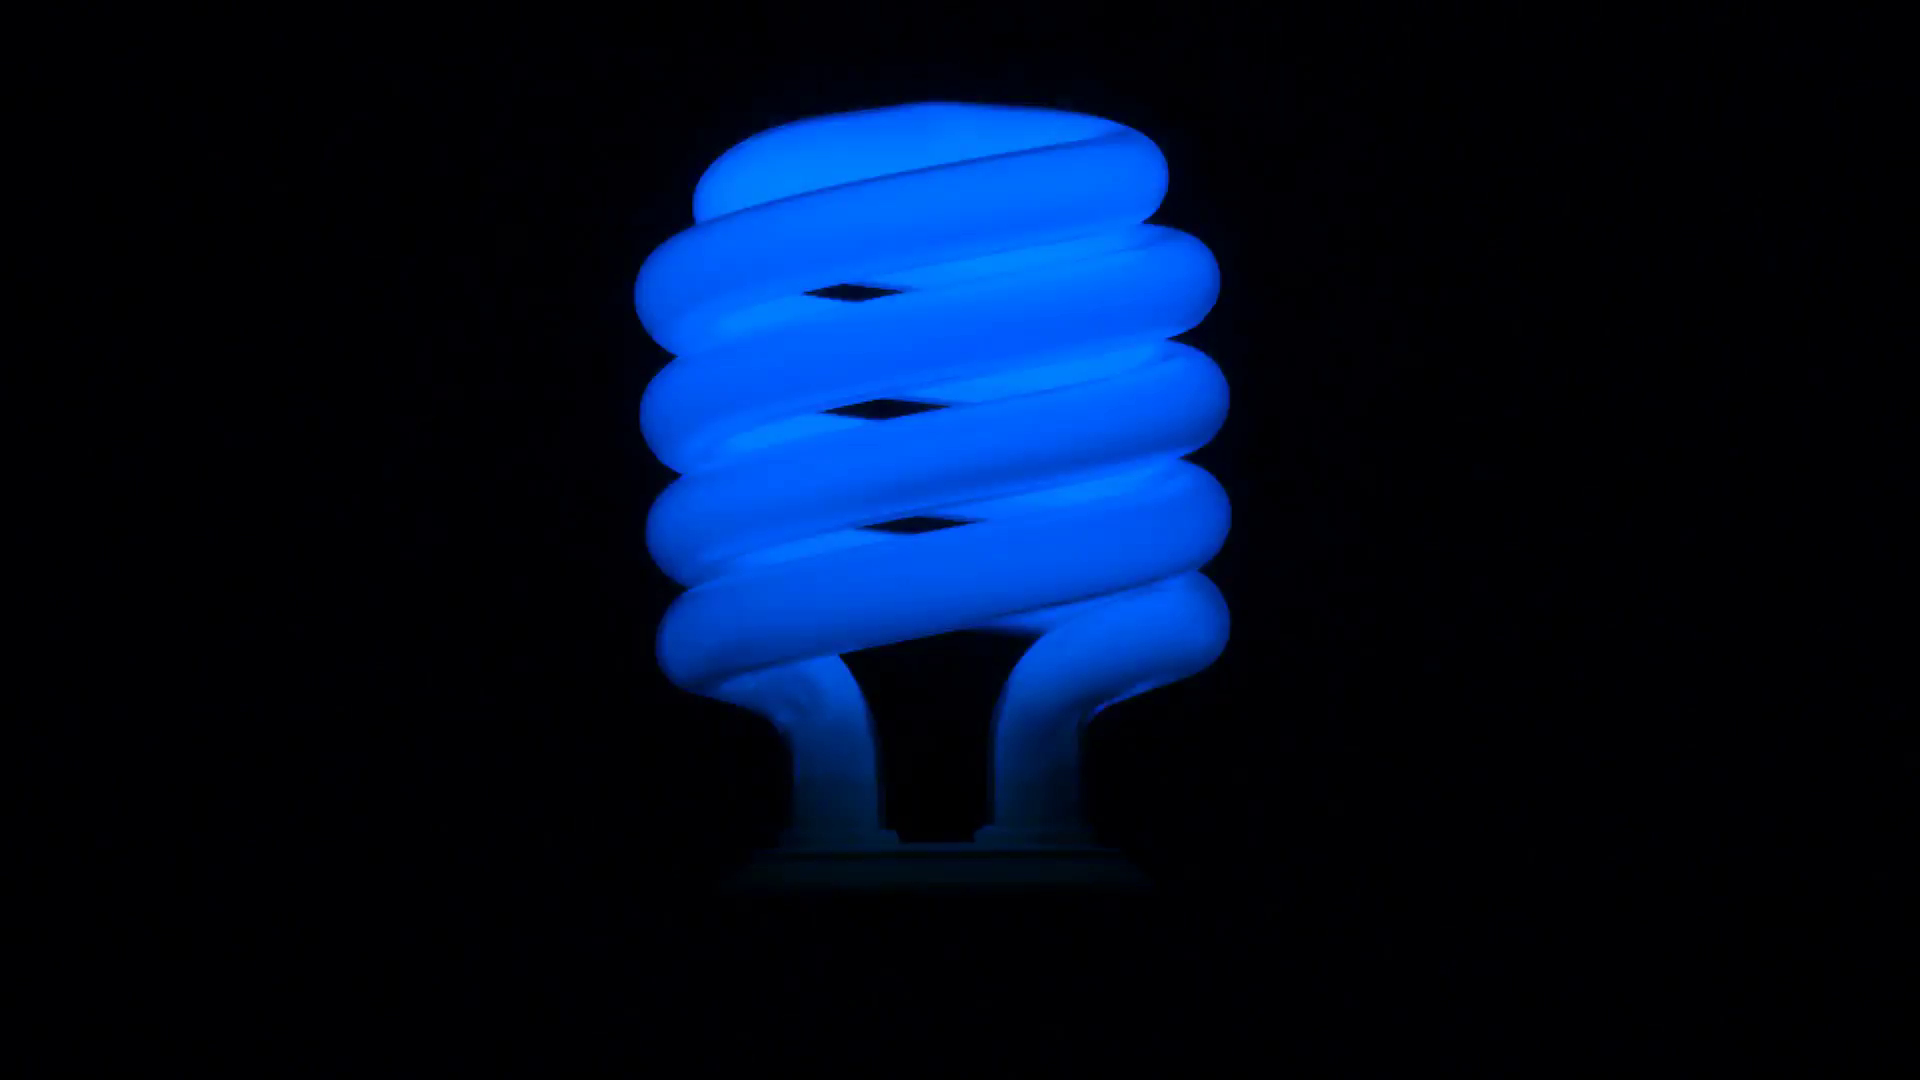 Flickering Blue Fluorescent Light Bulb In Dark Room Against Black intended for size 1920 X 1080